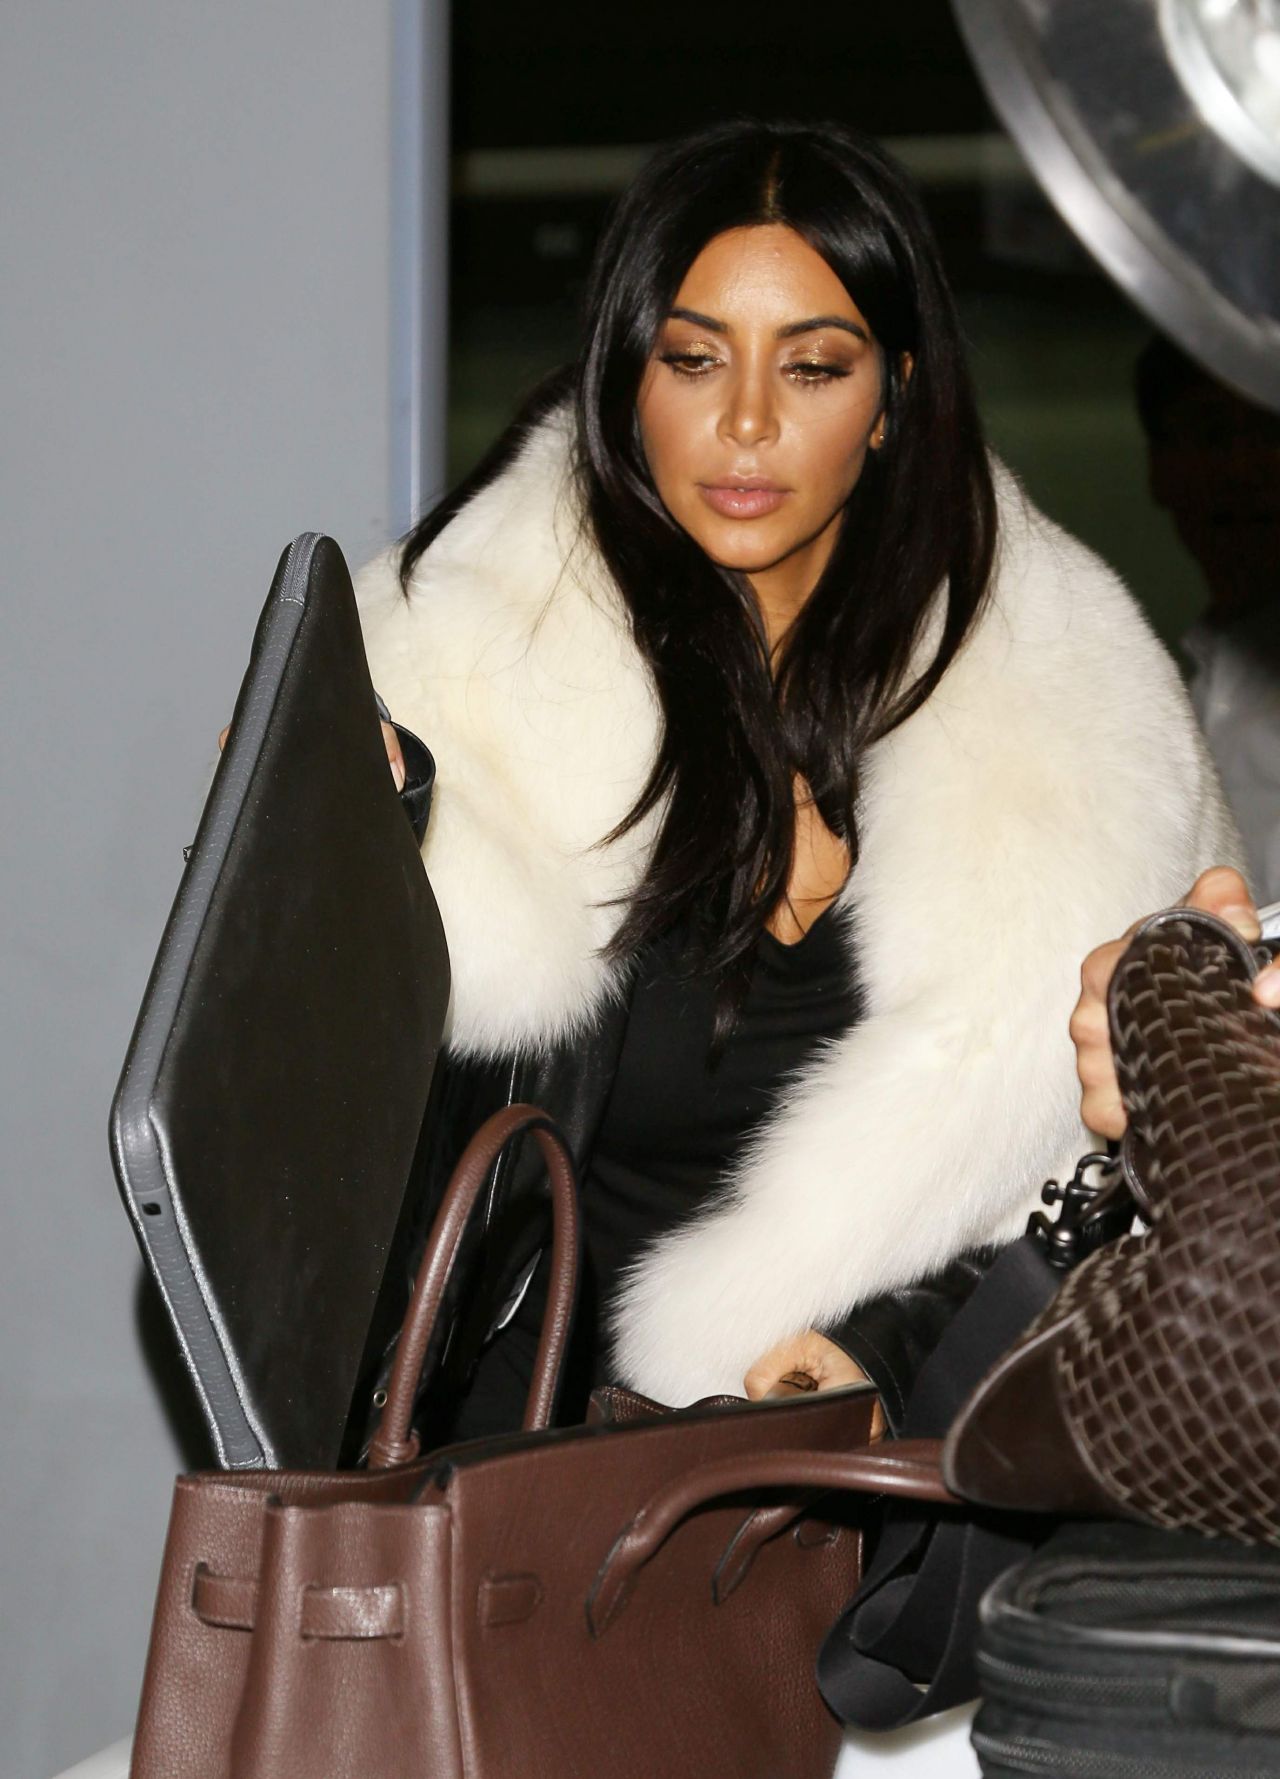 Kim Kardashian at LAX Airport February 13, 2009 – Star Style